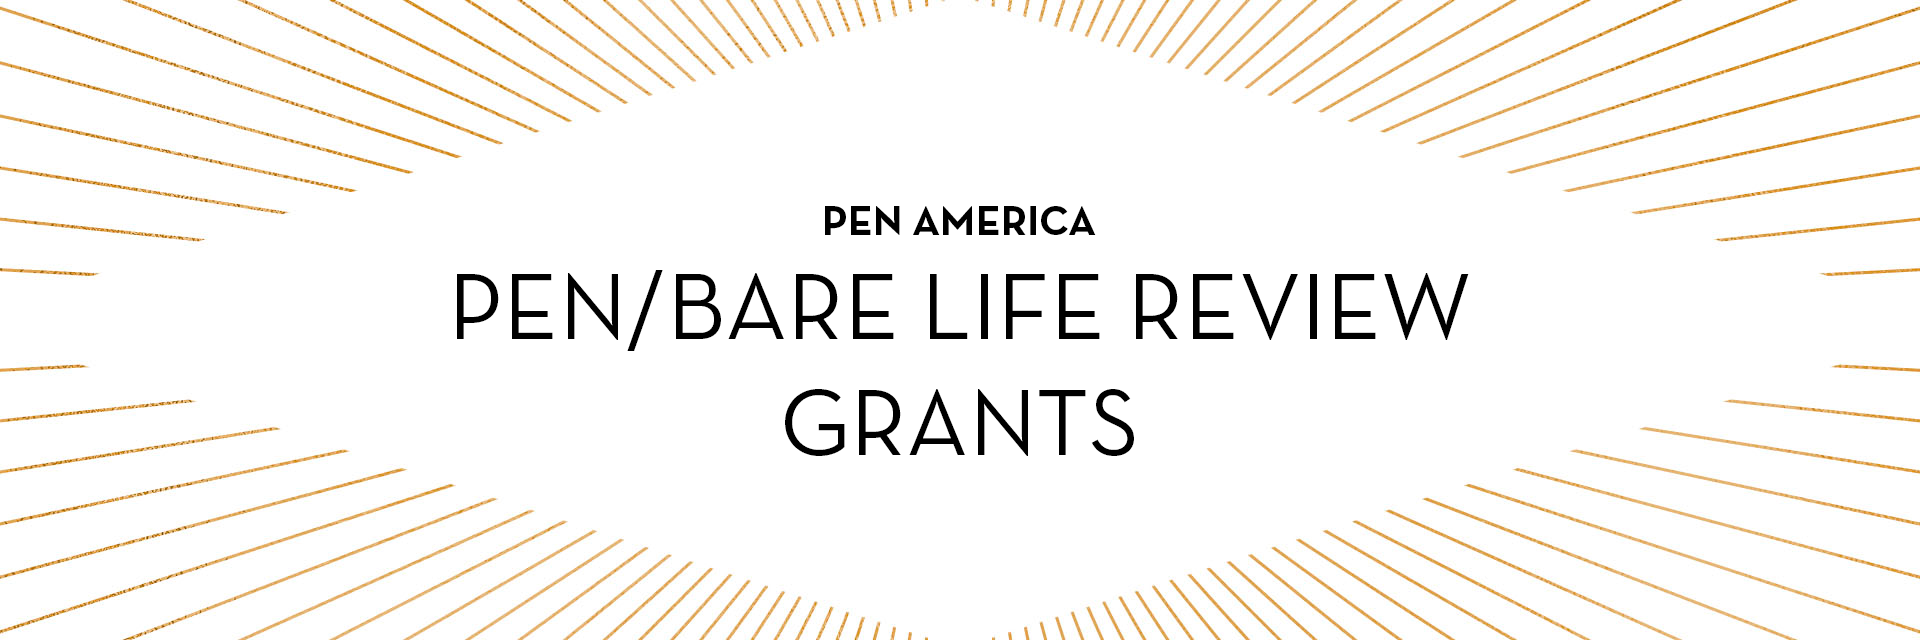 PEN/Bare Life Review Grants - PEN America